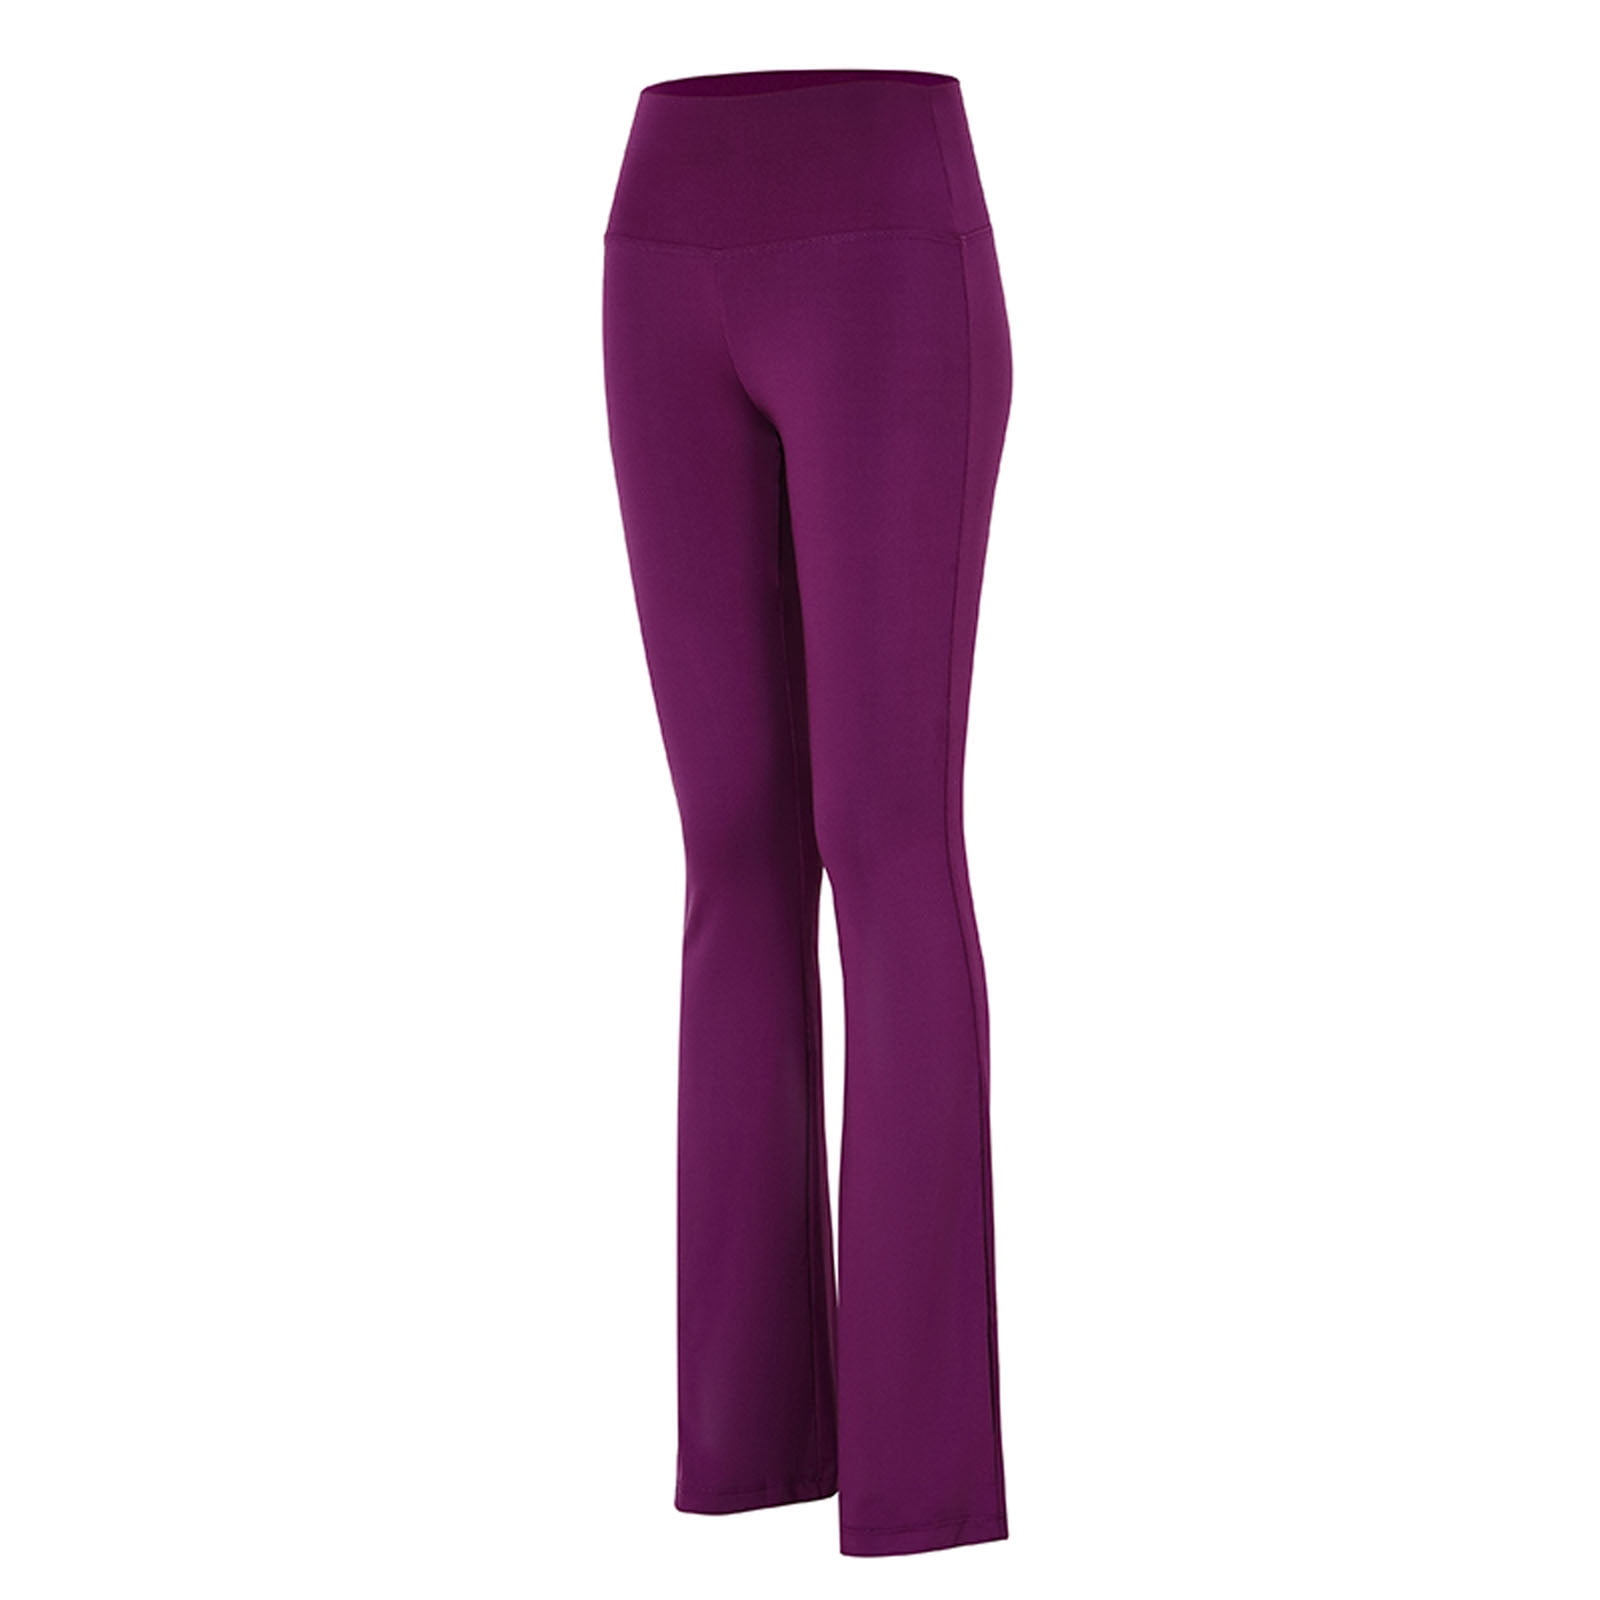 HAPIMO Savings Women's Yoga Flare Pants Workout Pants Slimming Stretch  Athletic Tummy Control Running Yoga Leggings for Women Purple XL 